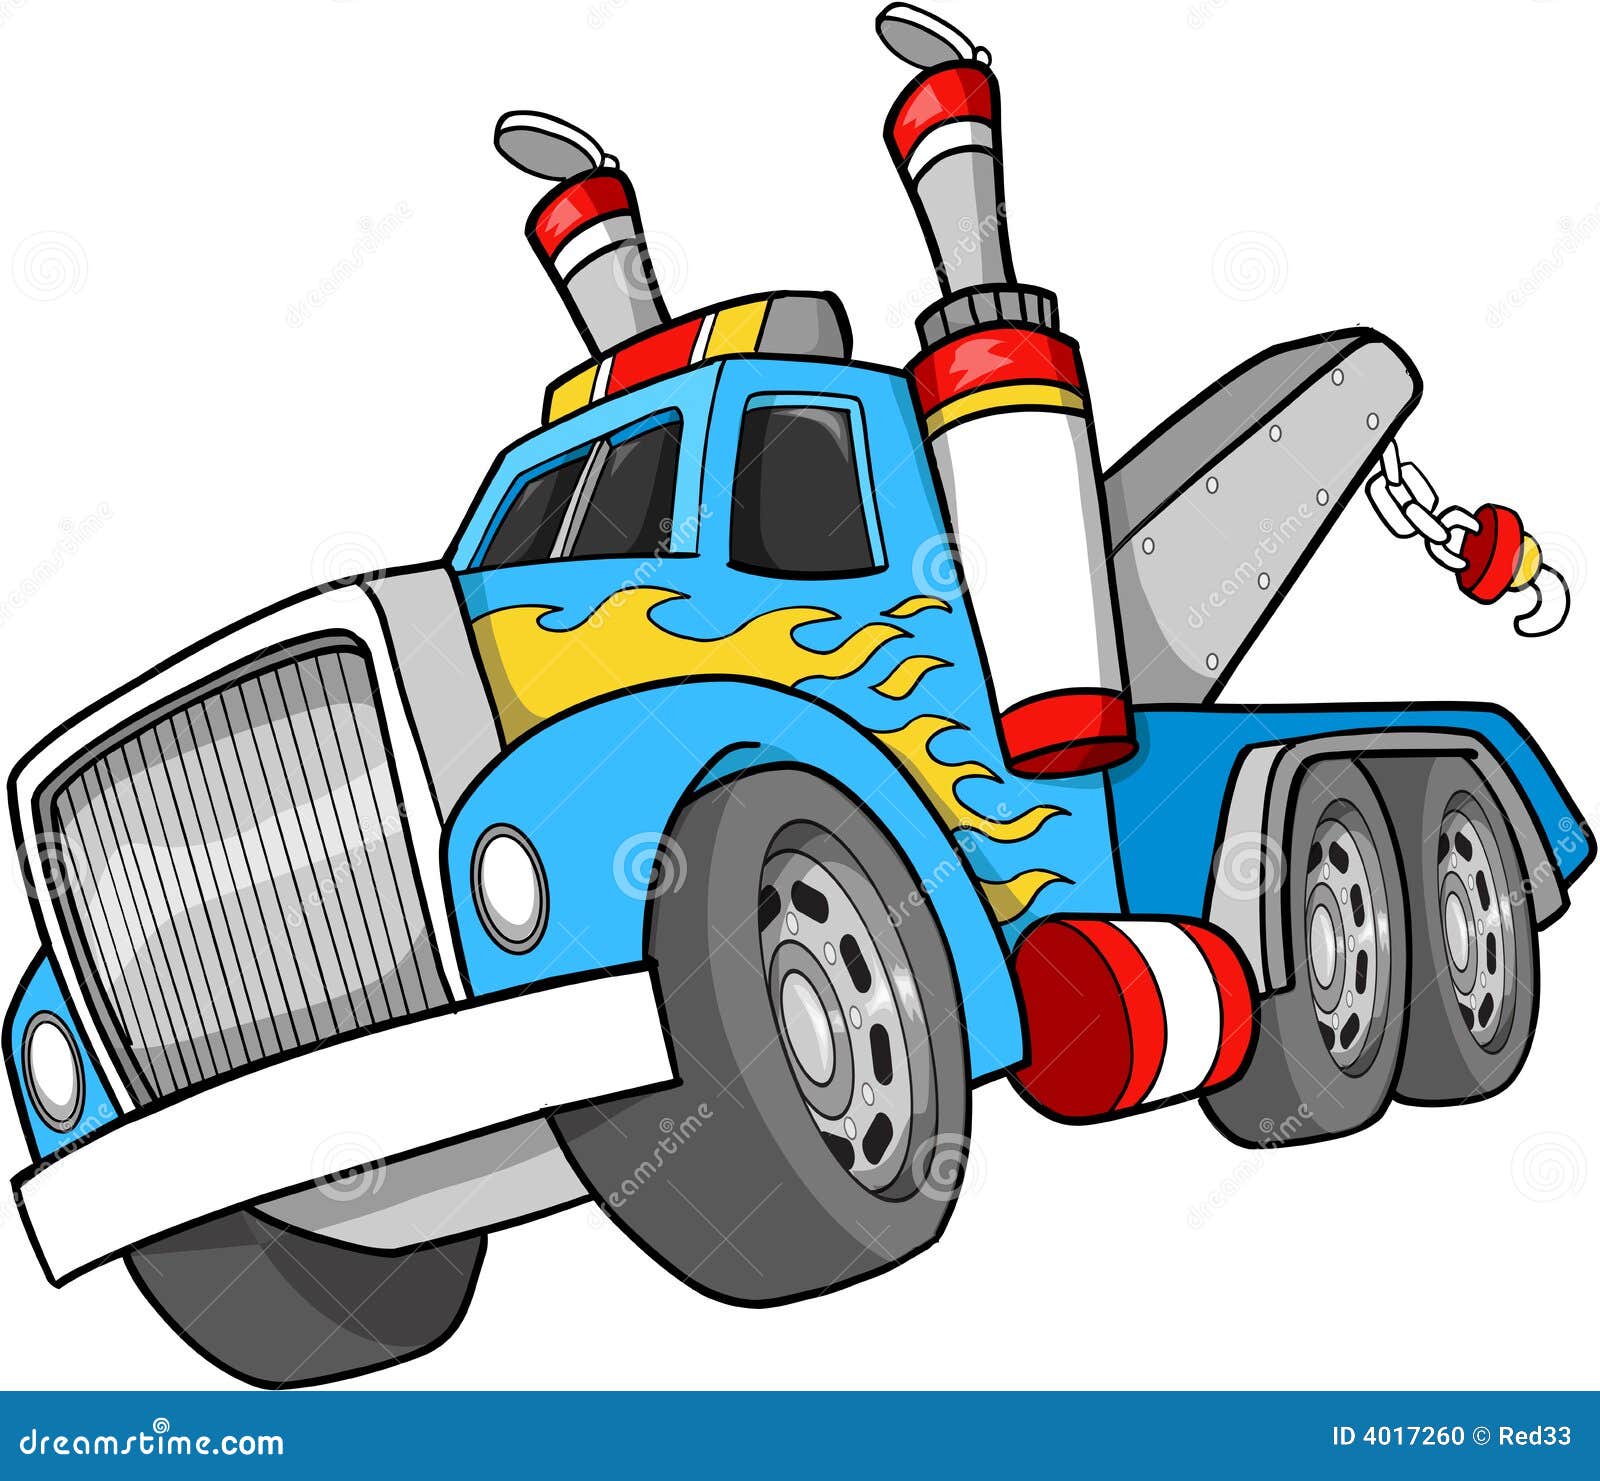 Tow Truck Illustration stock vector. Illustration of haul - 4017260